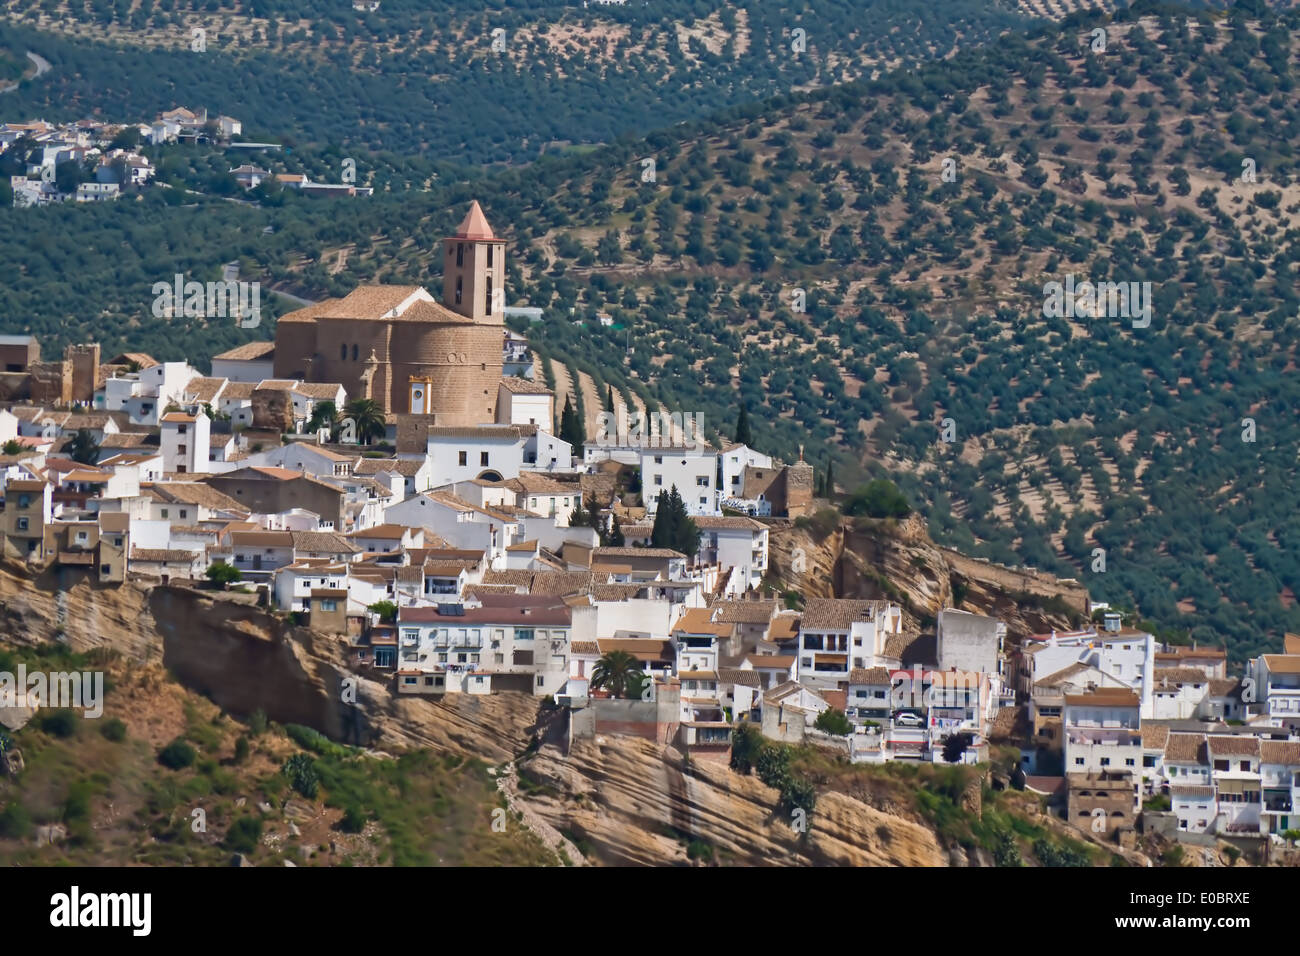 The small village Iznajar in Andalusia, Spain, Das kleine Dorf Iznajar in Andalusien, Spanien Stock Photo